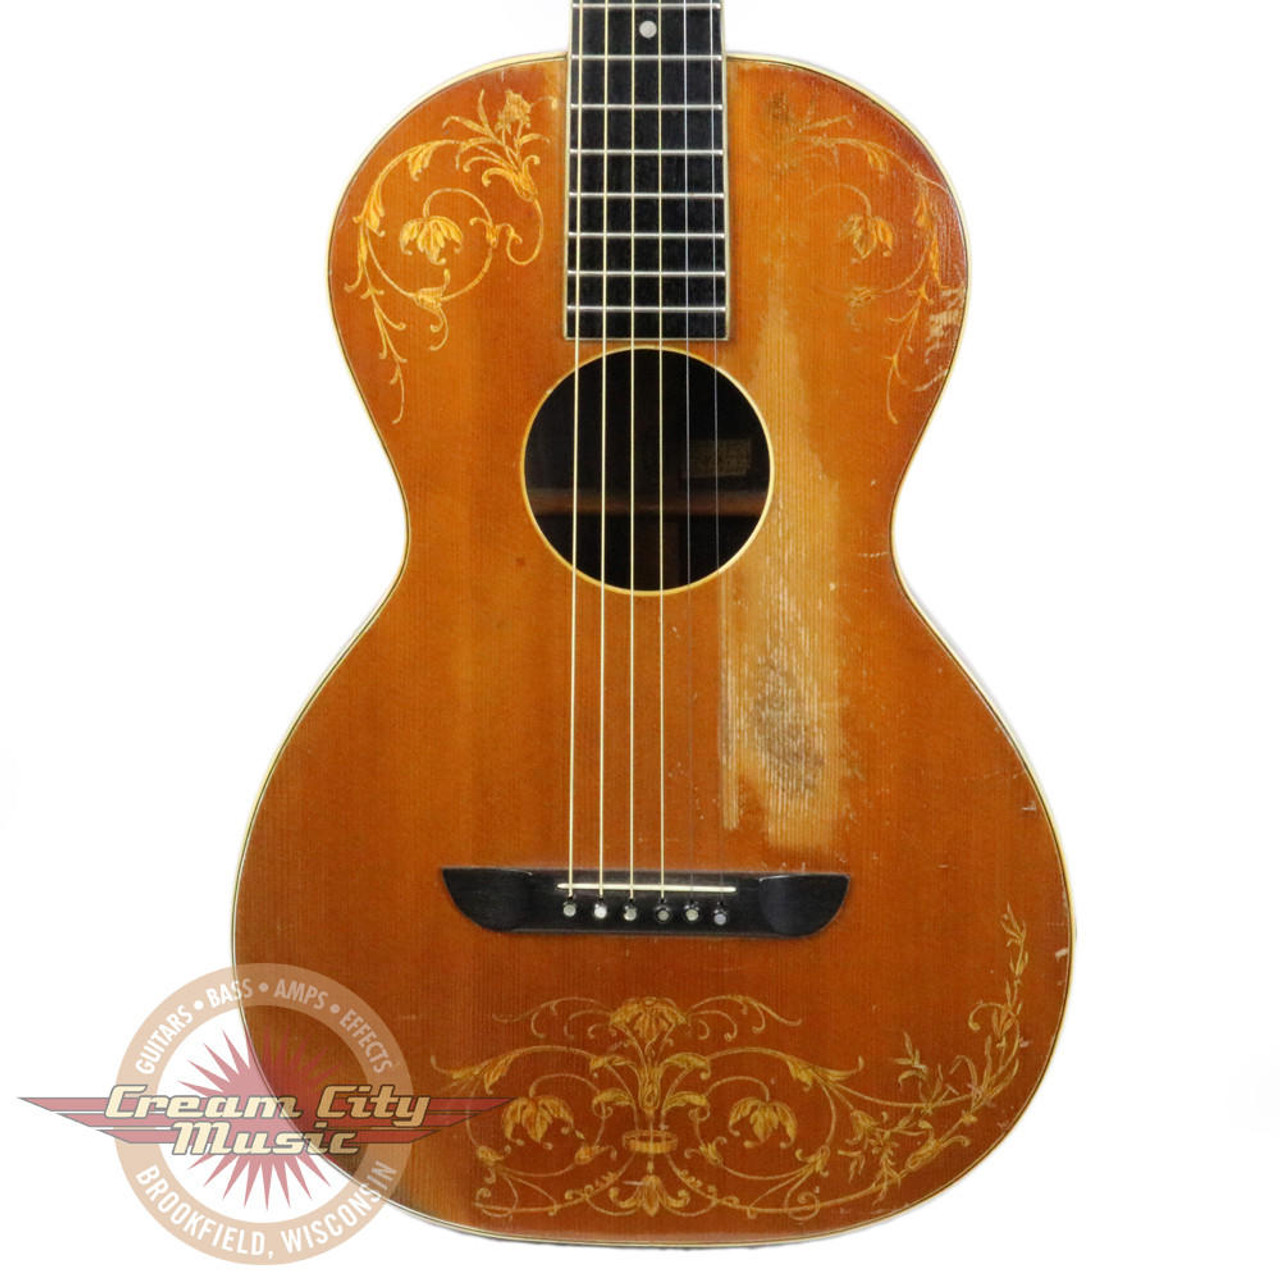 G.E. Smith's Vintage 1920's Washburn Lyon & Healy Style A Parlor Guitar